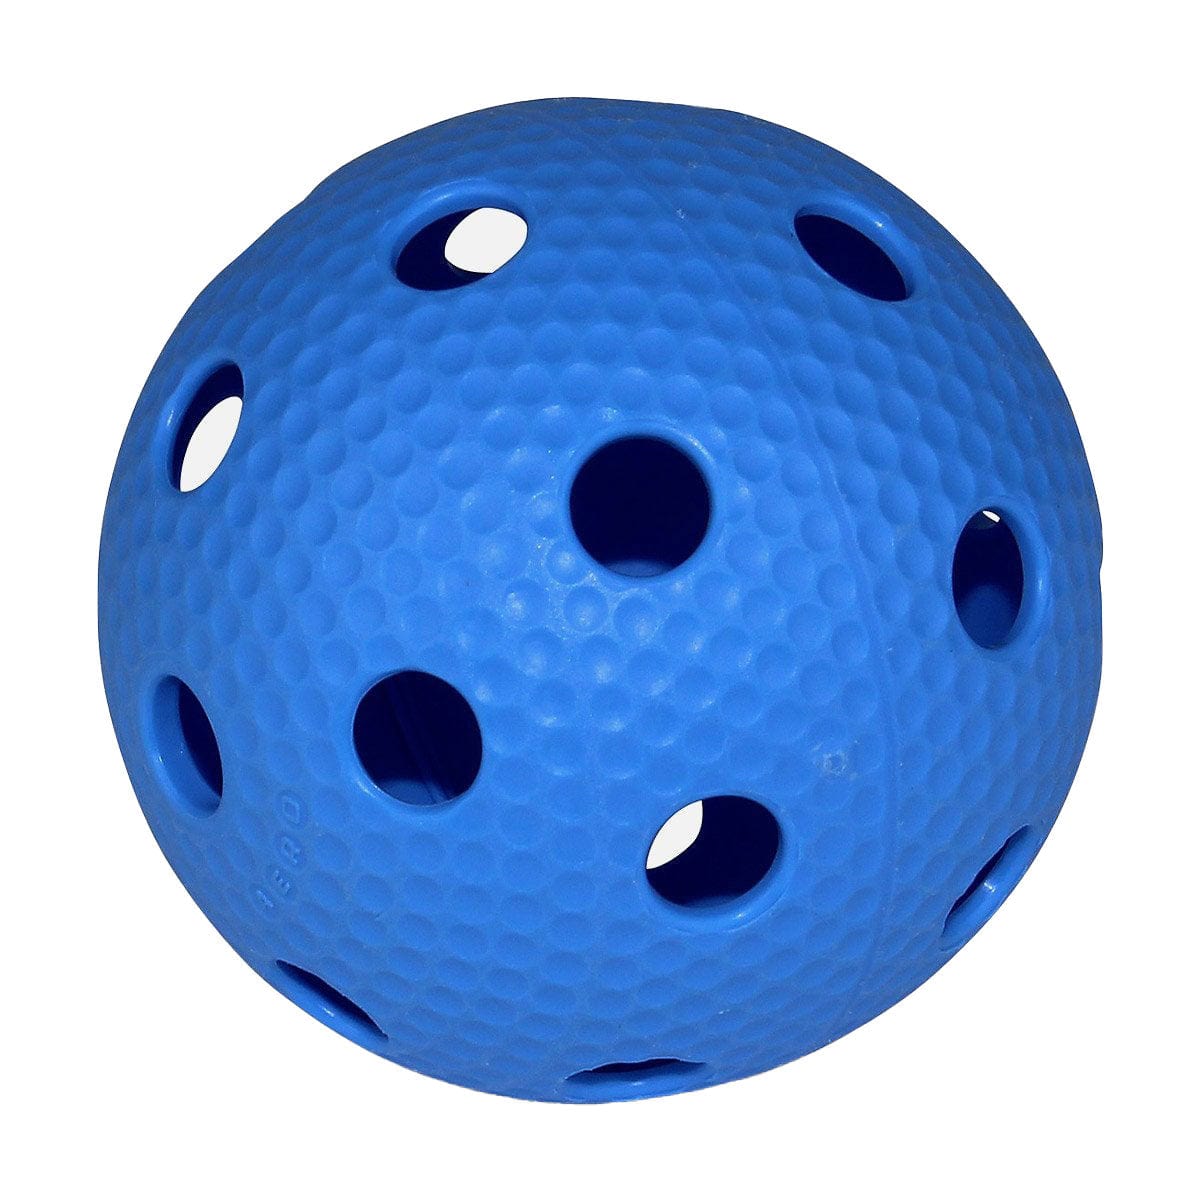 Accufli Floorball Ball - Blue